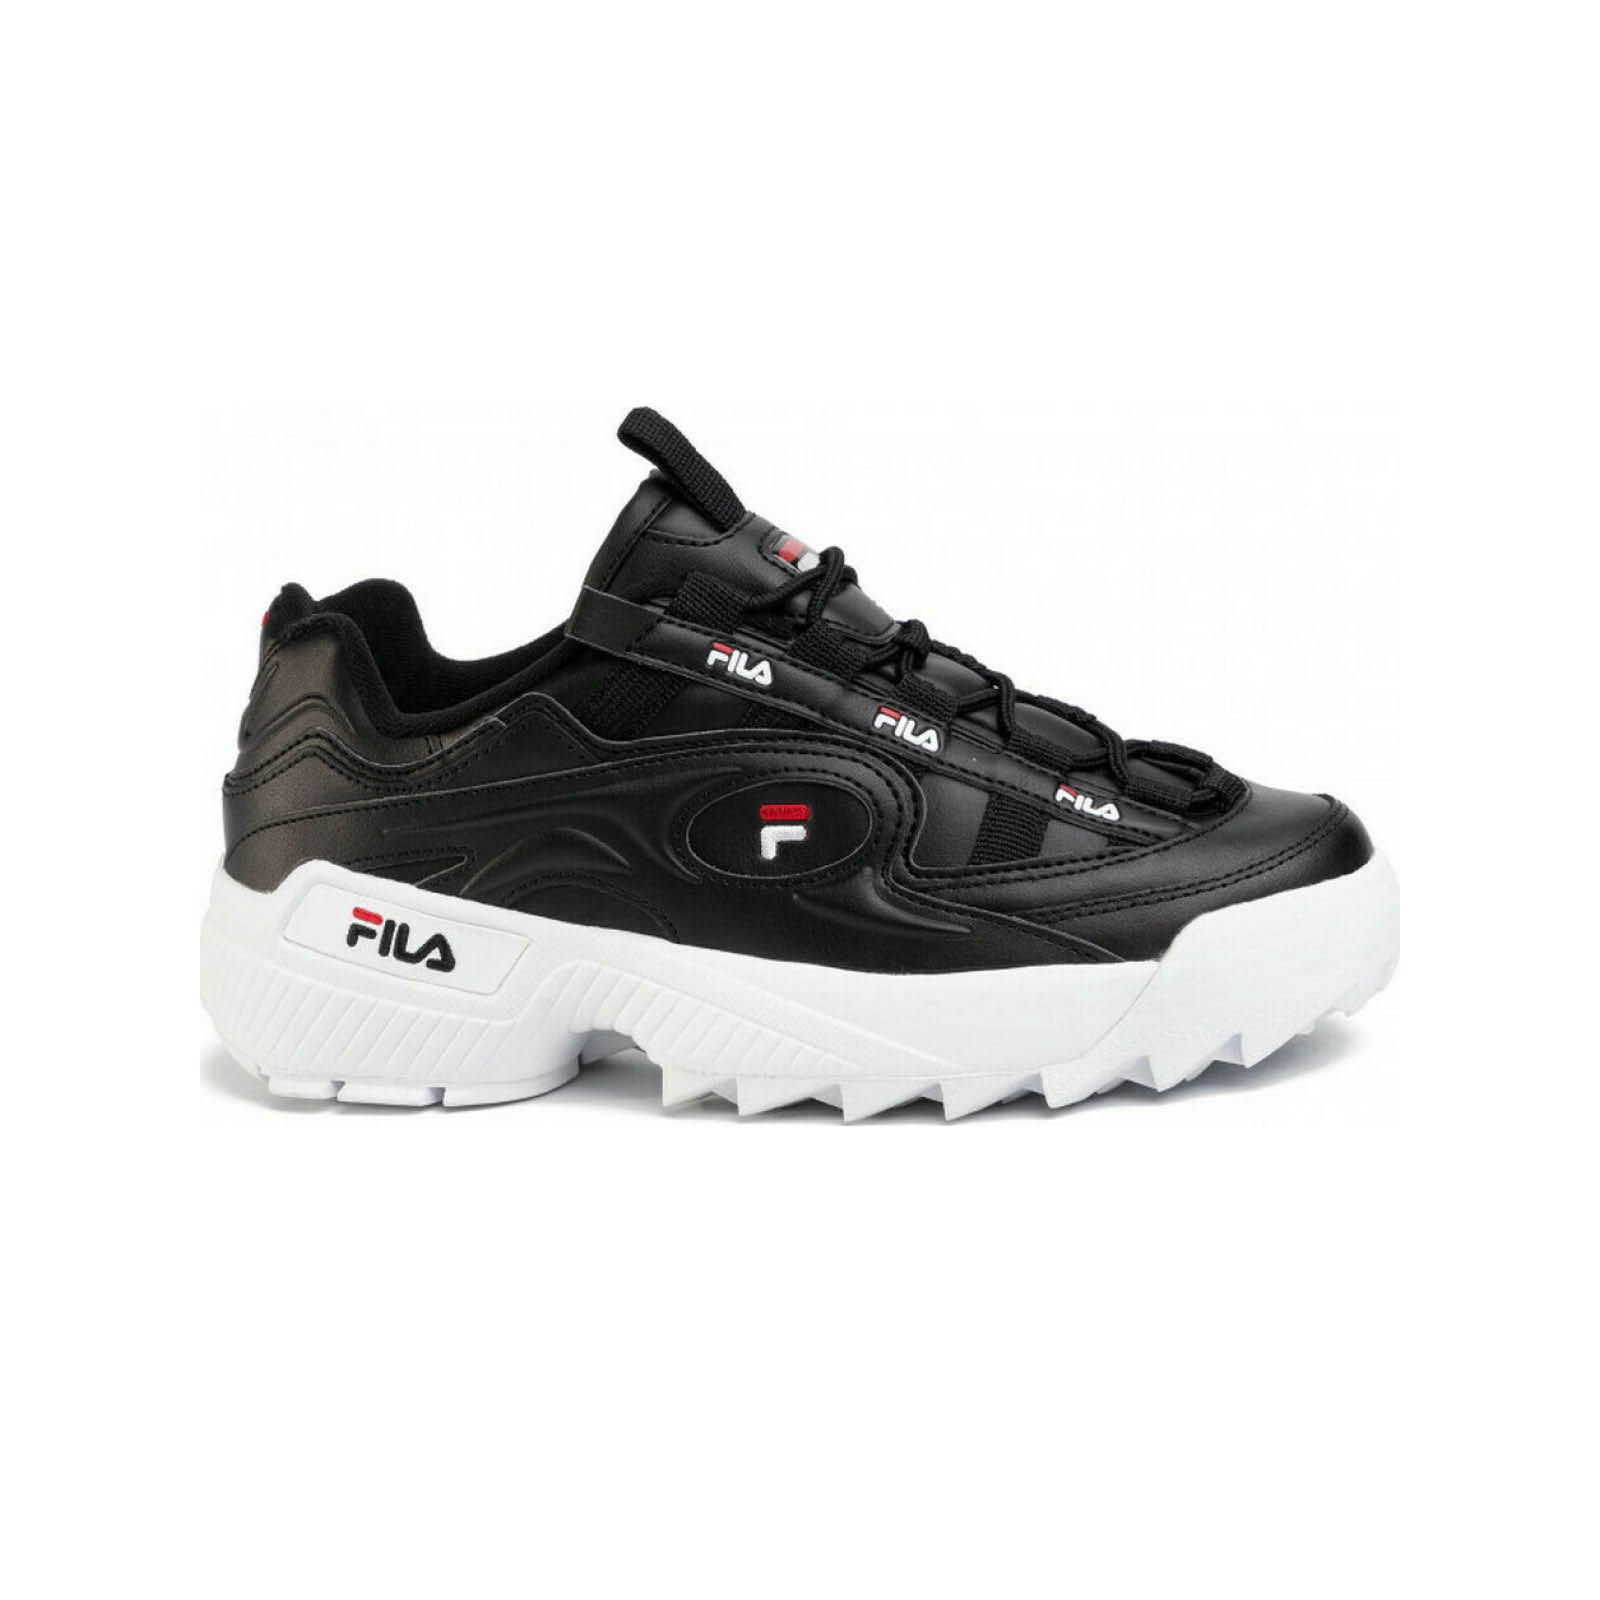 Fila - 1228689.0 D-FORMATION FOOTWEAR - . BLACK Παιδικά > Παπούτσια > Αθλητικά > Παπούτσι Low Cut